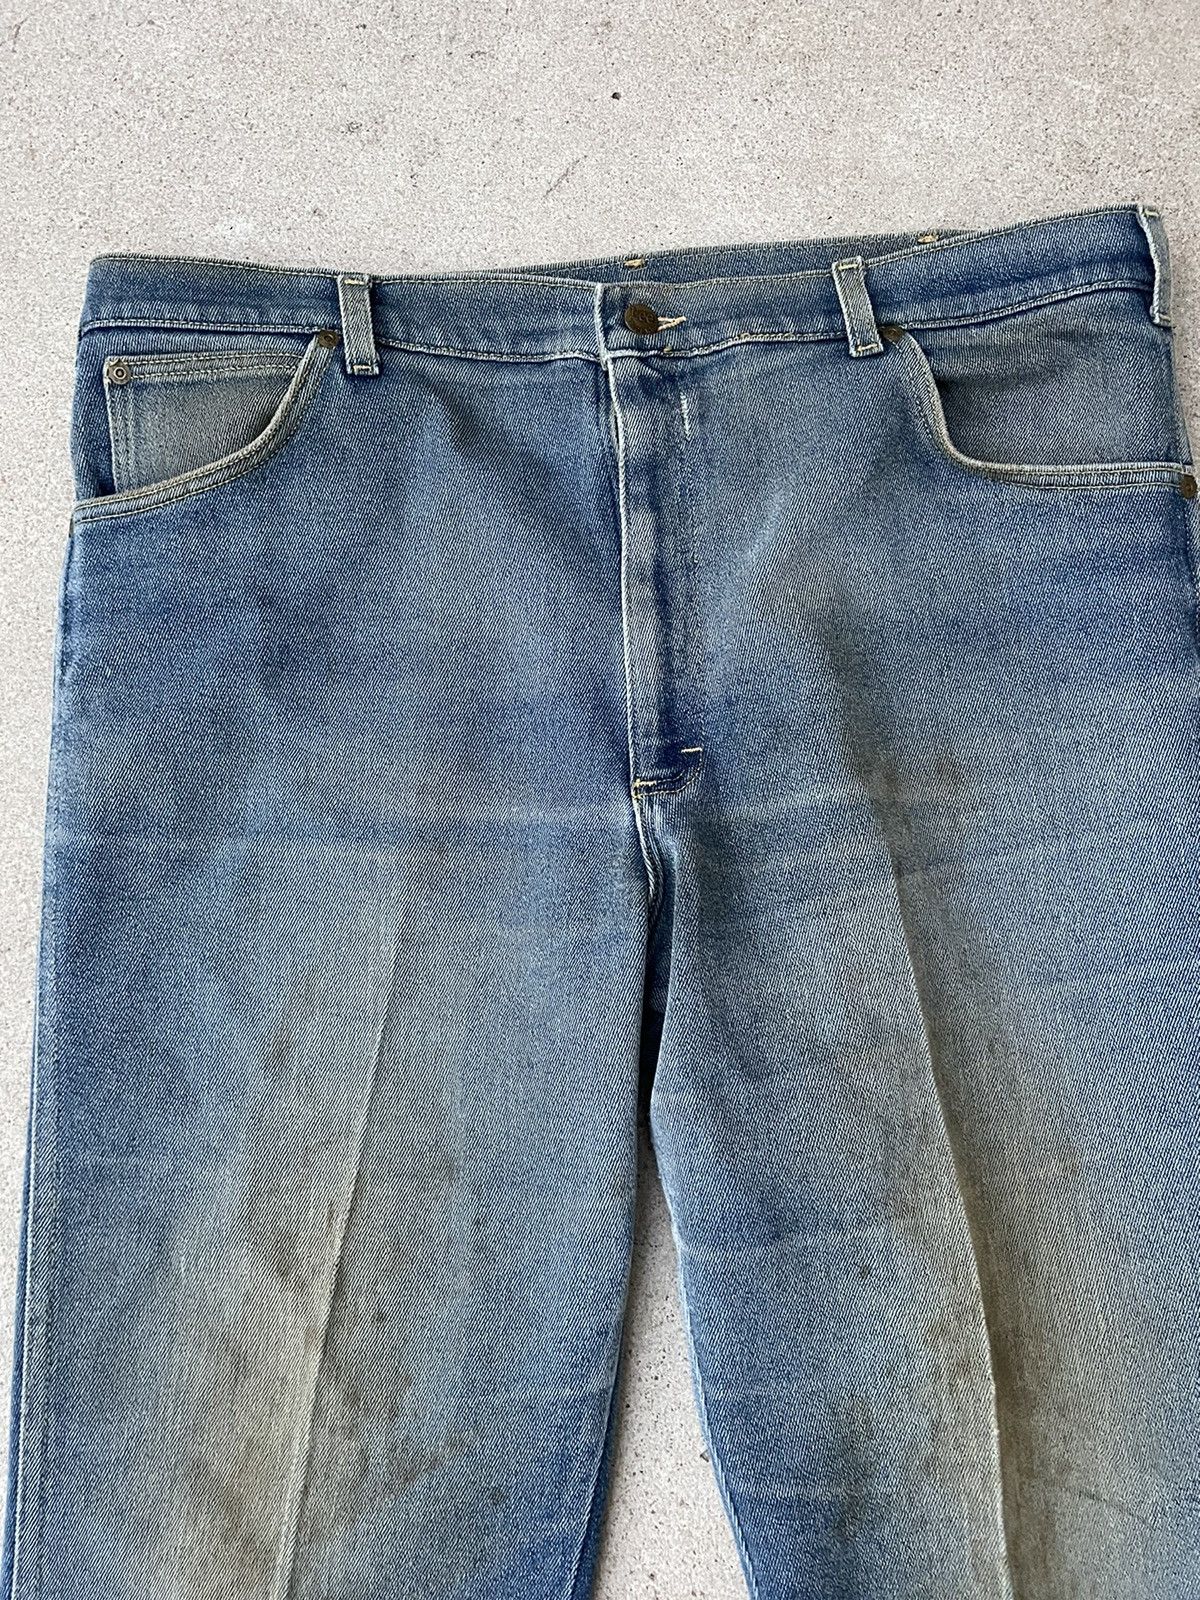 Vintage Vintage 70s Lee Bootcut Distressed Mud Wash Jeans Mens 40x32 Size US 40 / EU 56 - 3 Thumbnail